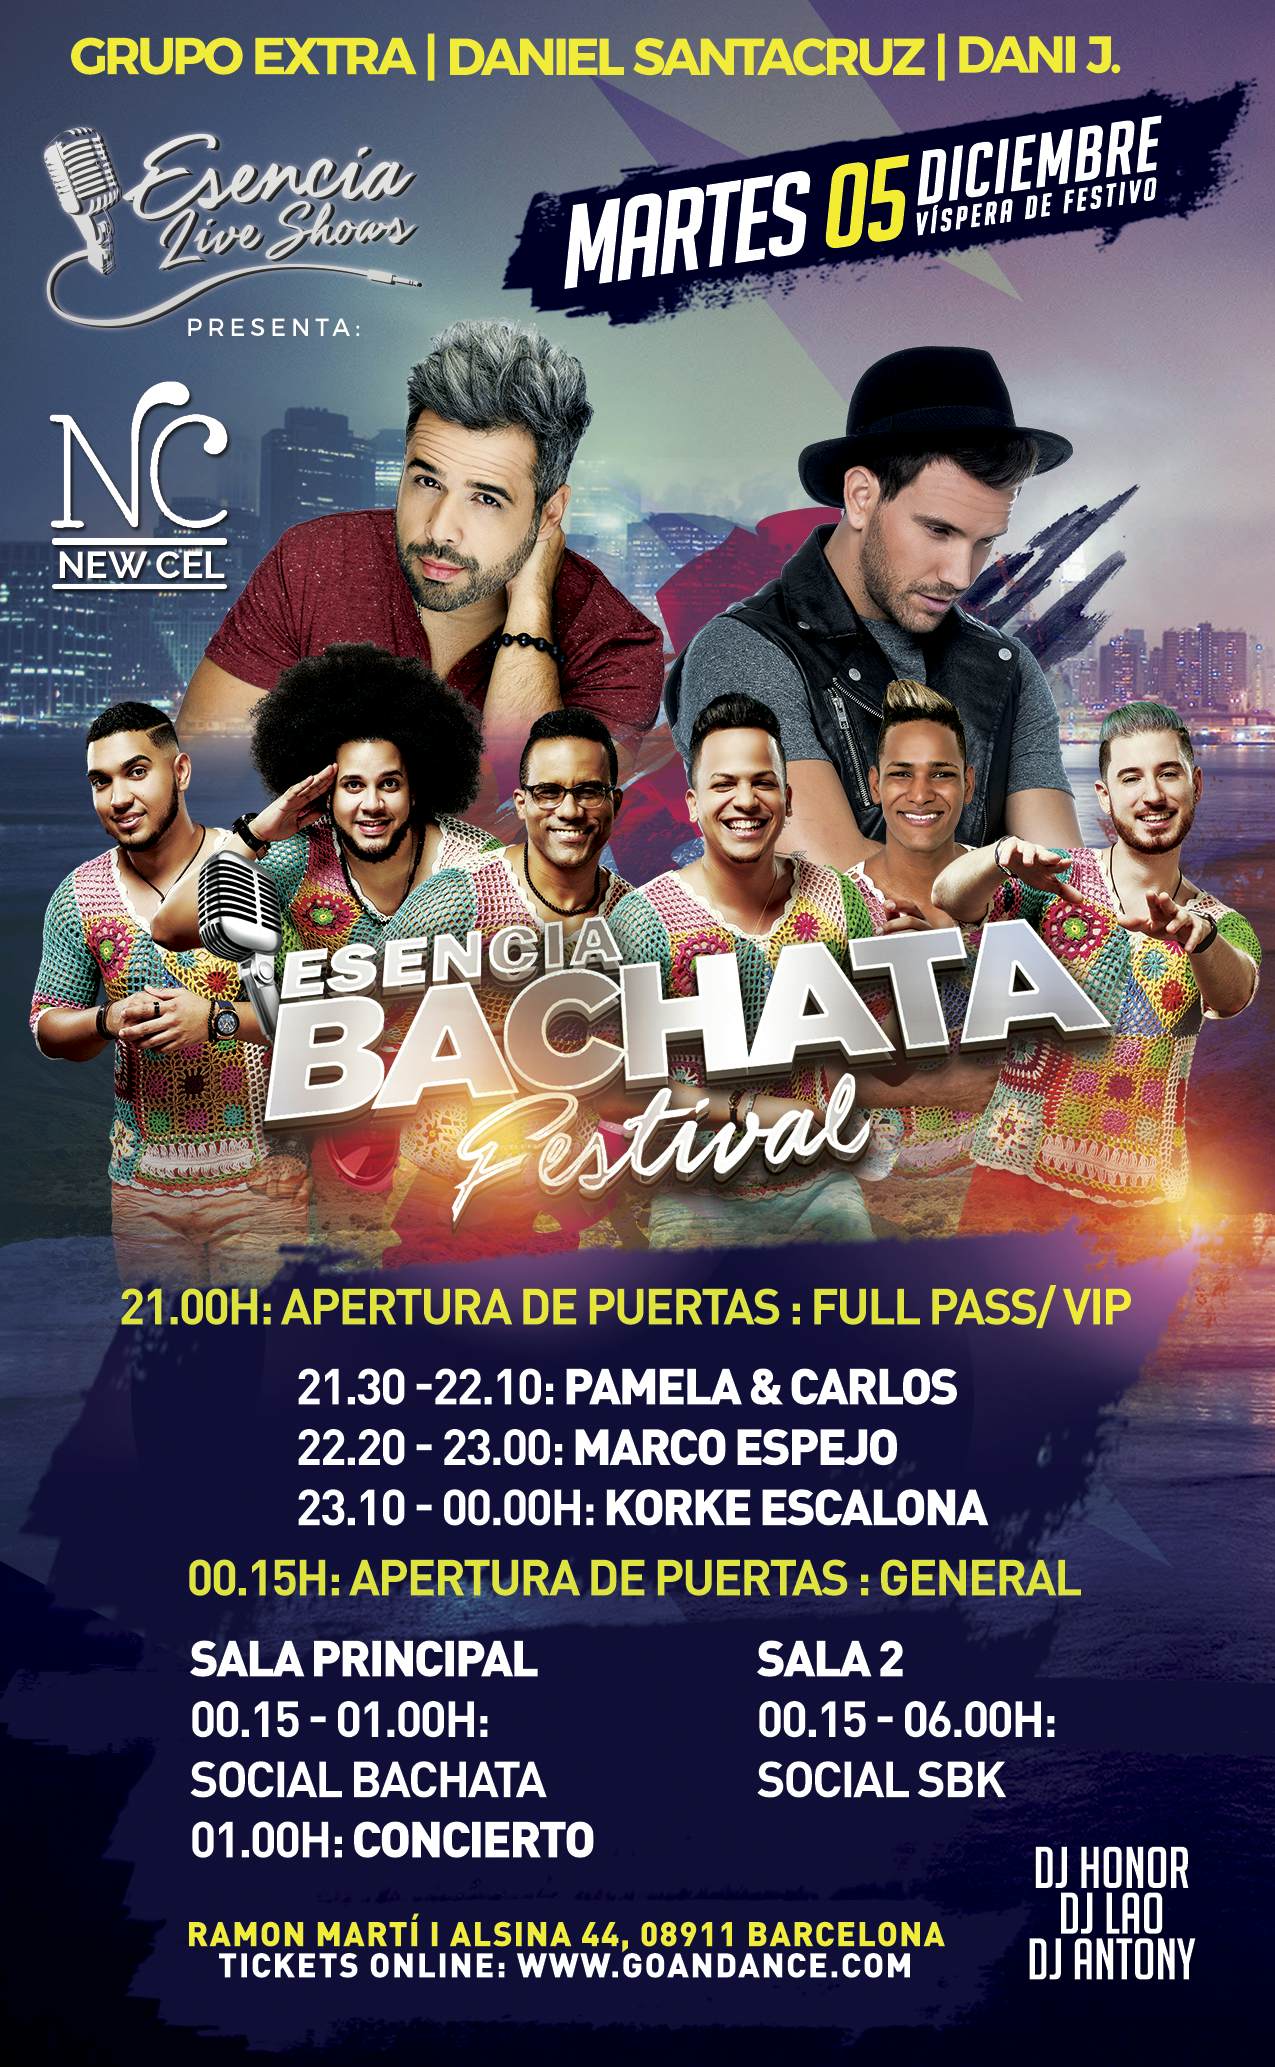 Problema laberinto Cardenal Daniel Santacruz, Dani J & Grupo Extra - Triple concierto en BCN - go&dance